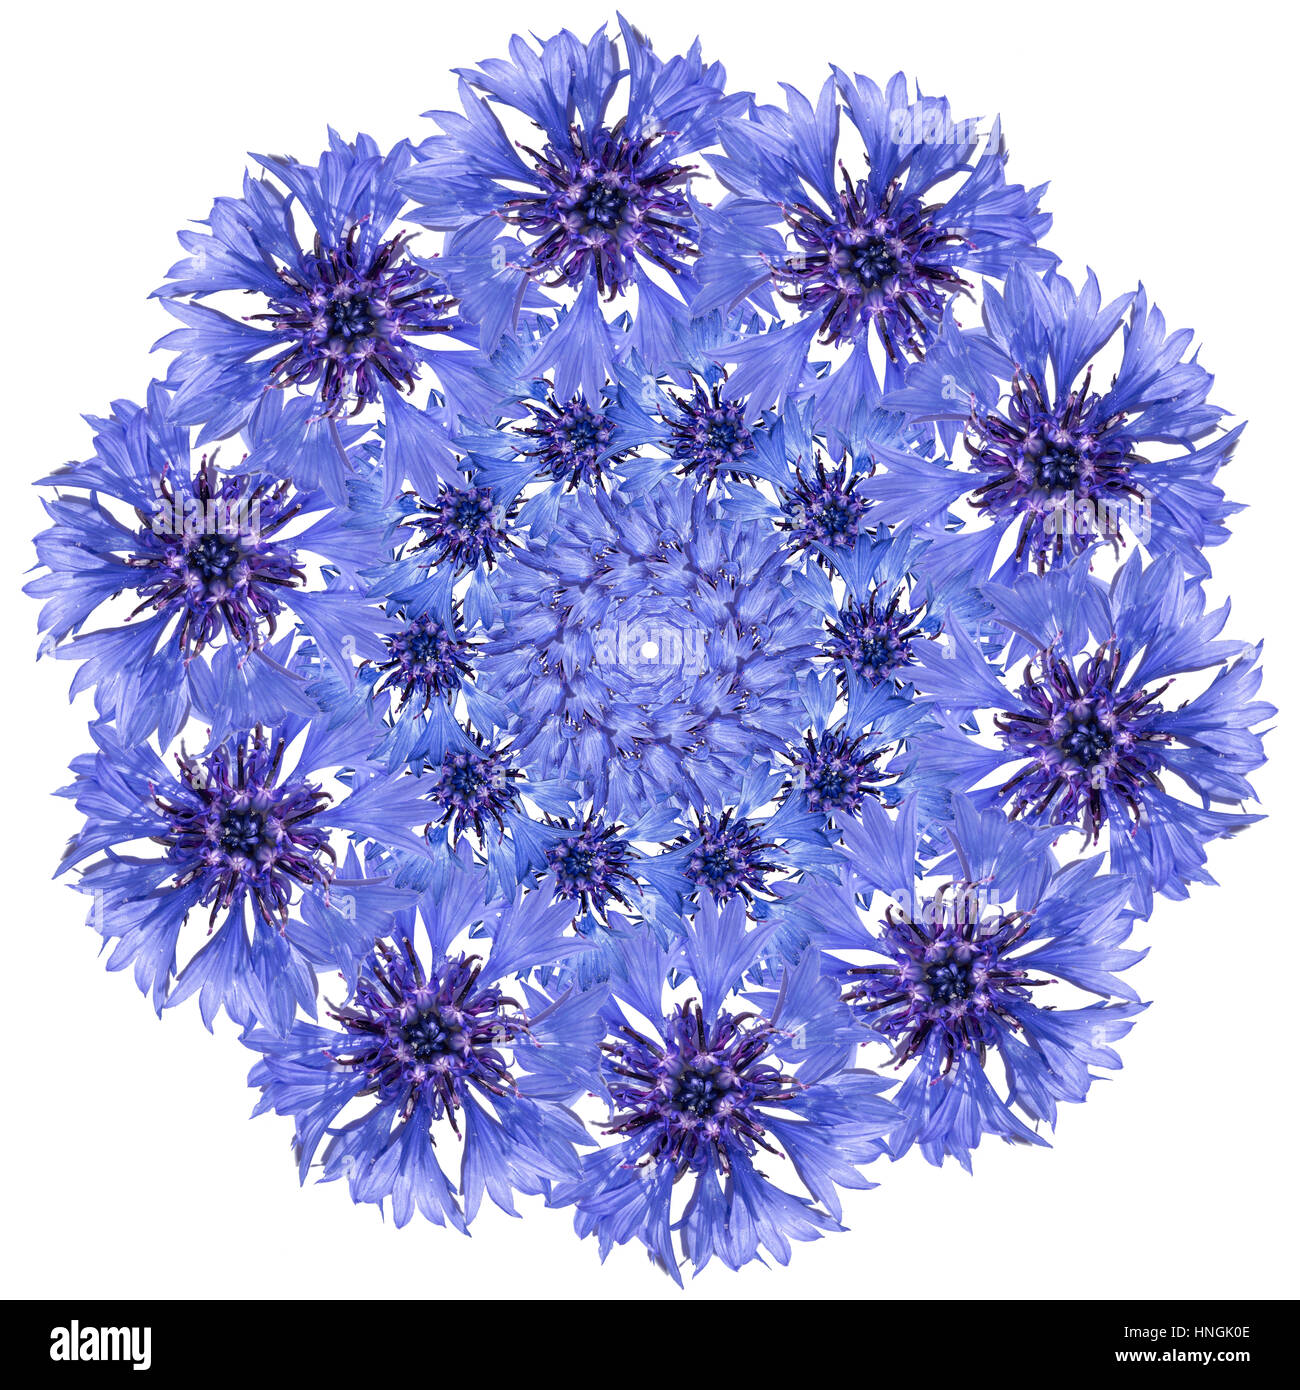 Flower mandala. Cornflower blue floral circular design Stock Photo